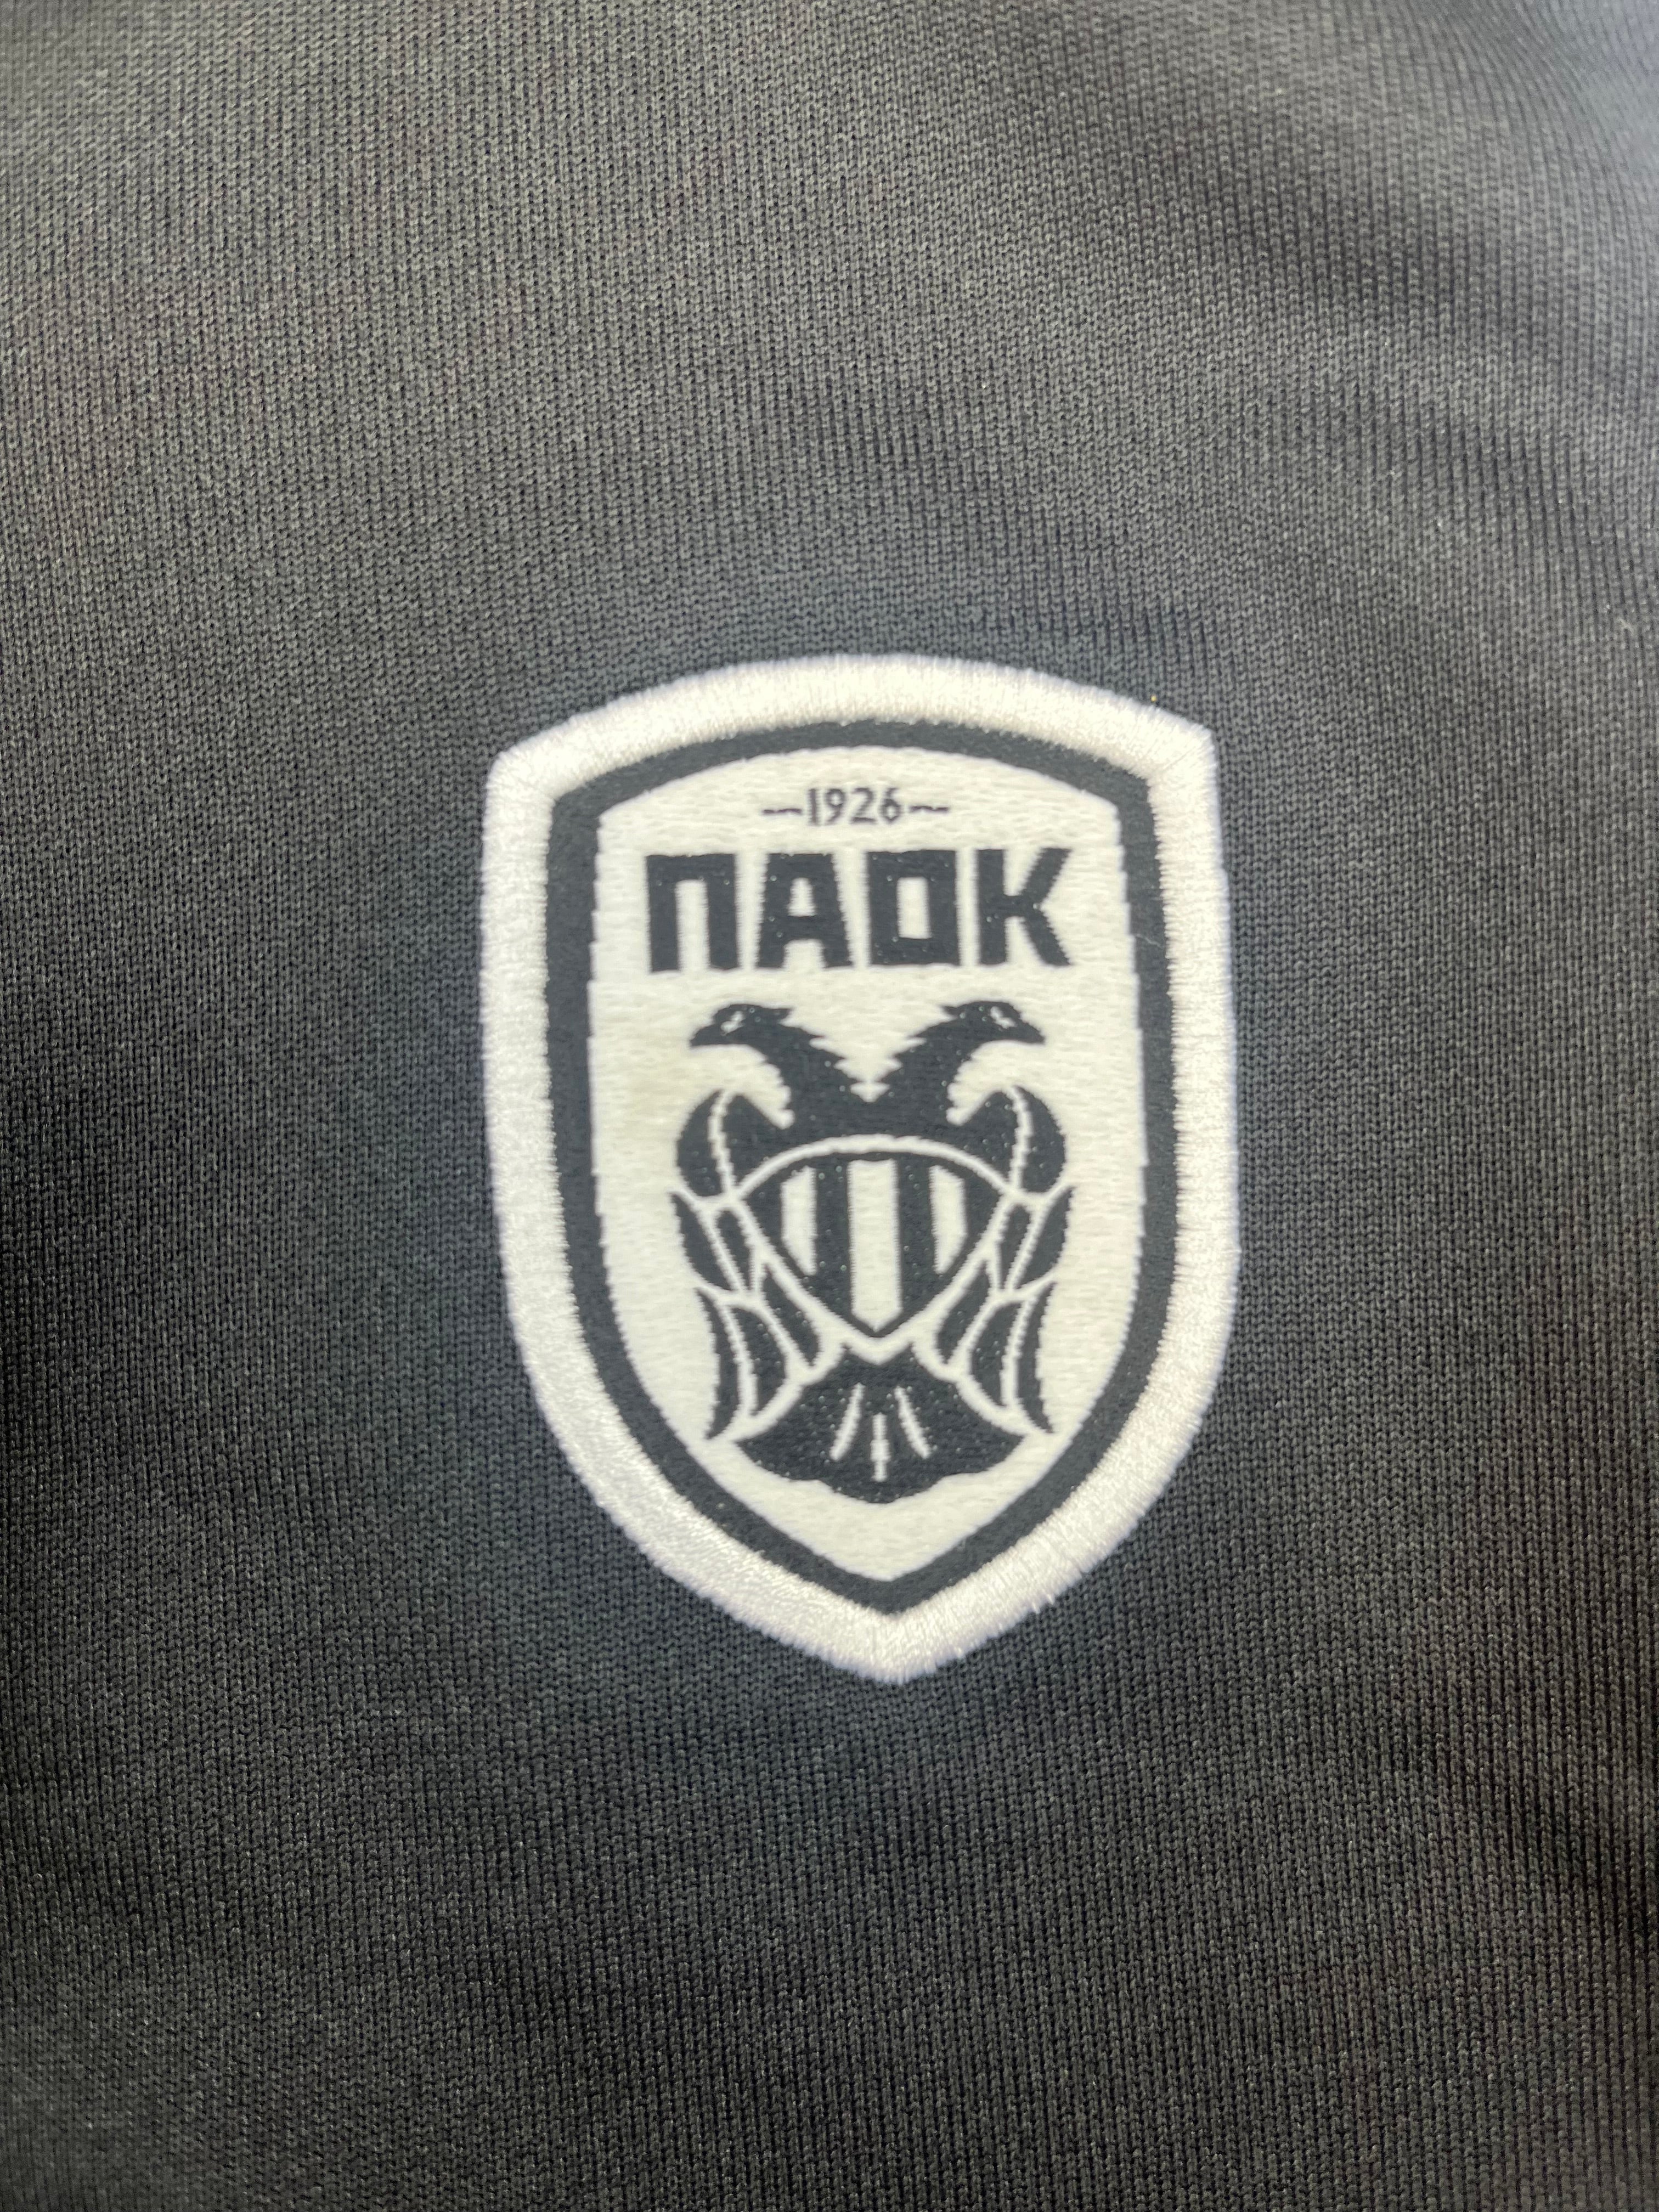 2019/20 PAOK Track Jacket (XS) BNWT